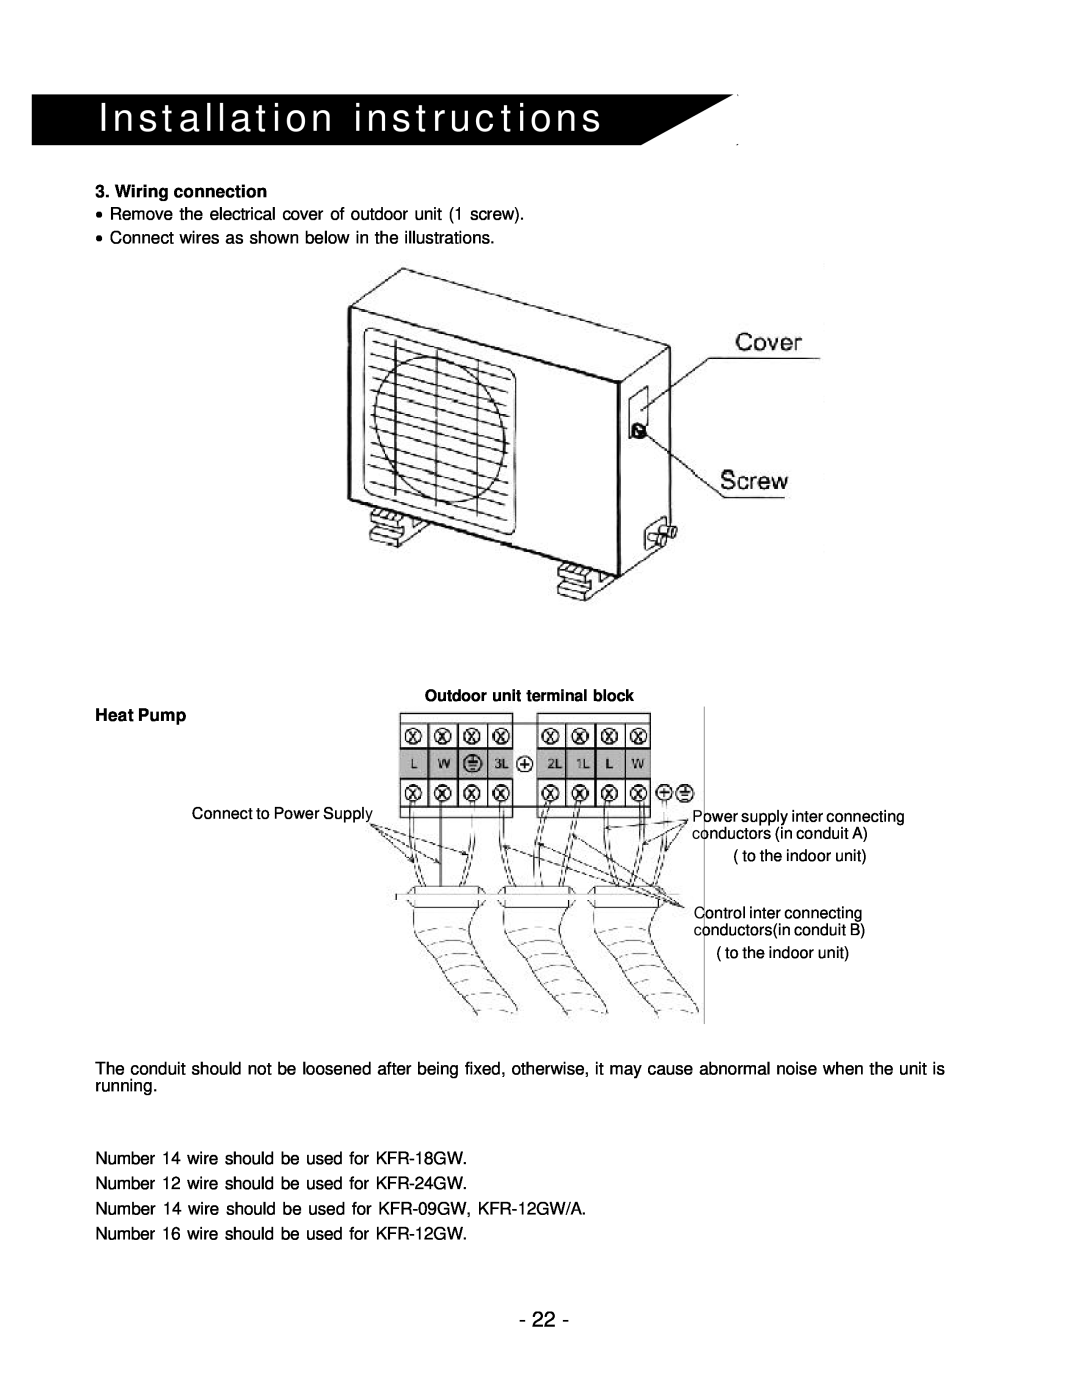 Soleus Air KFR/KFS Series manual Installation instructions, Wiring connection, Heat Pump 